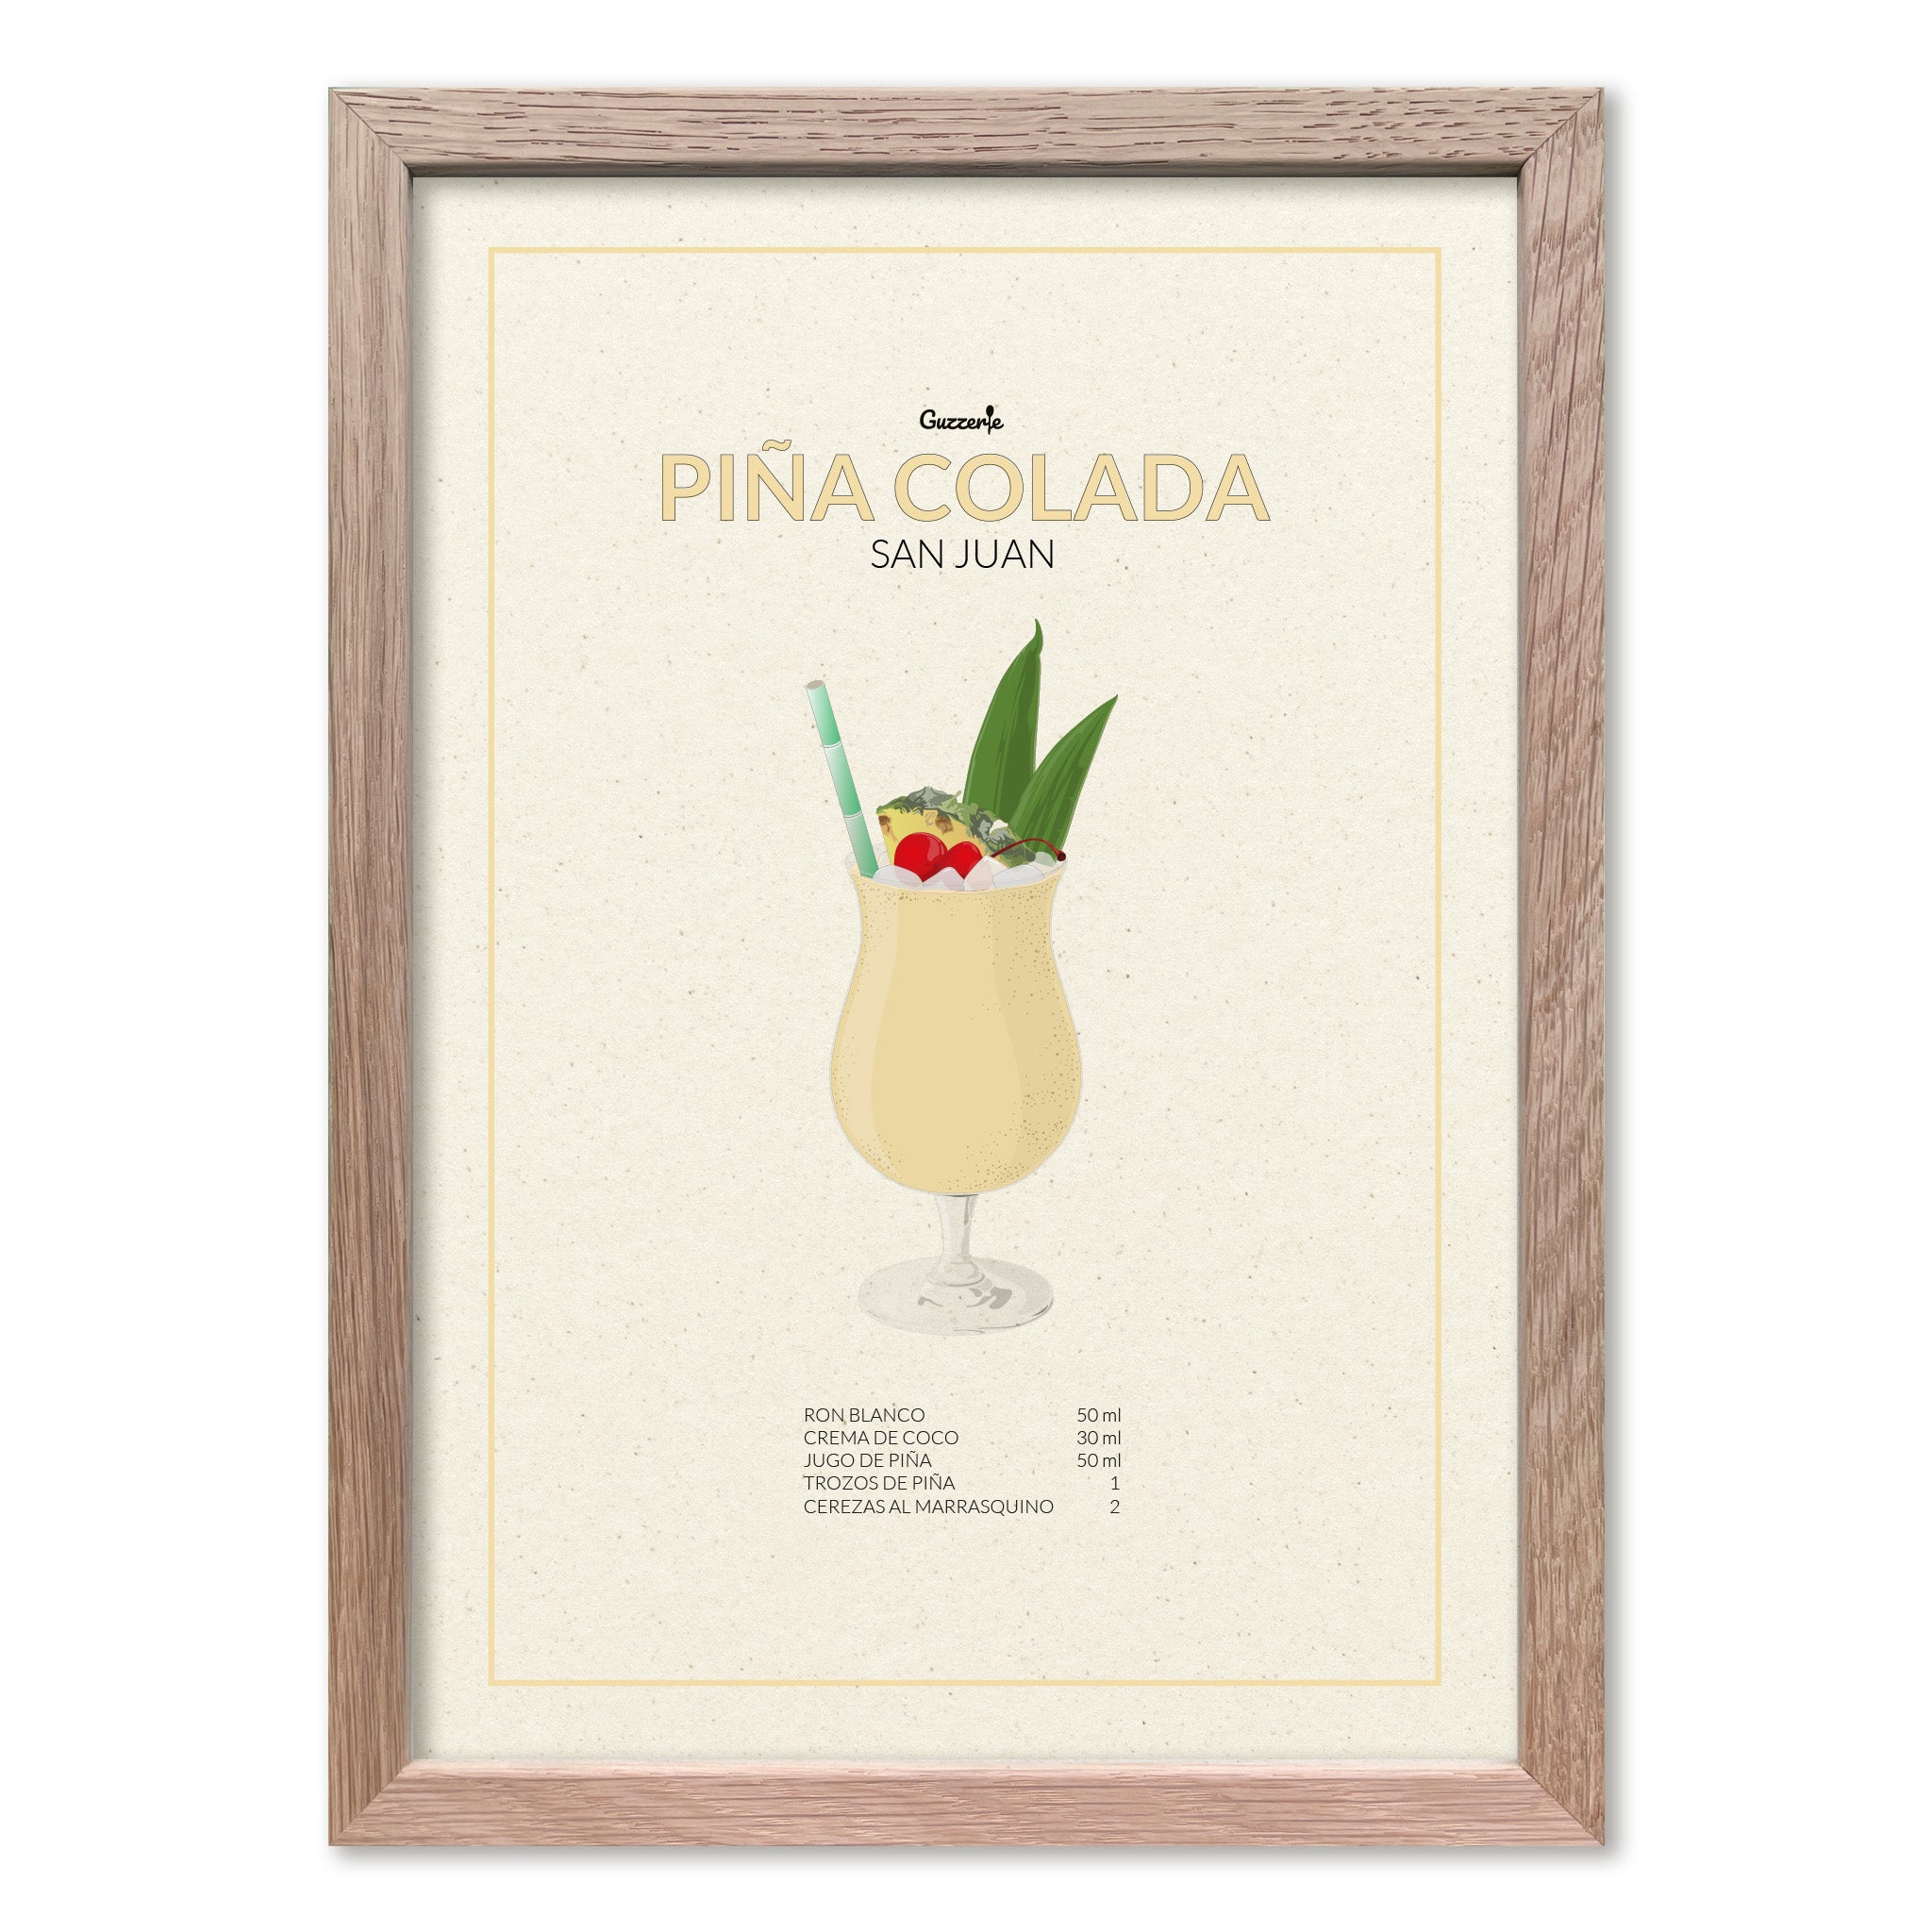 Iconic Poster of Piña Colada Cocktail | Guzzerie